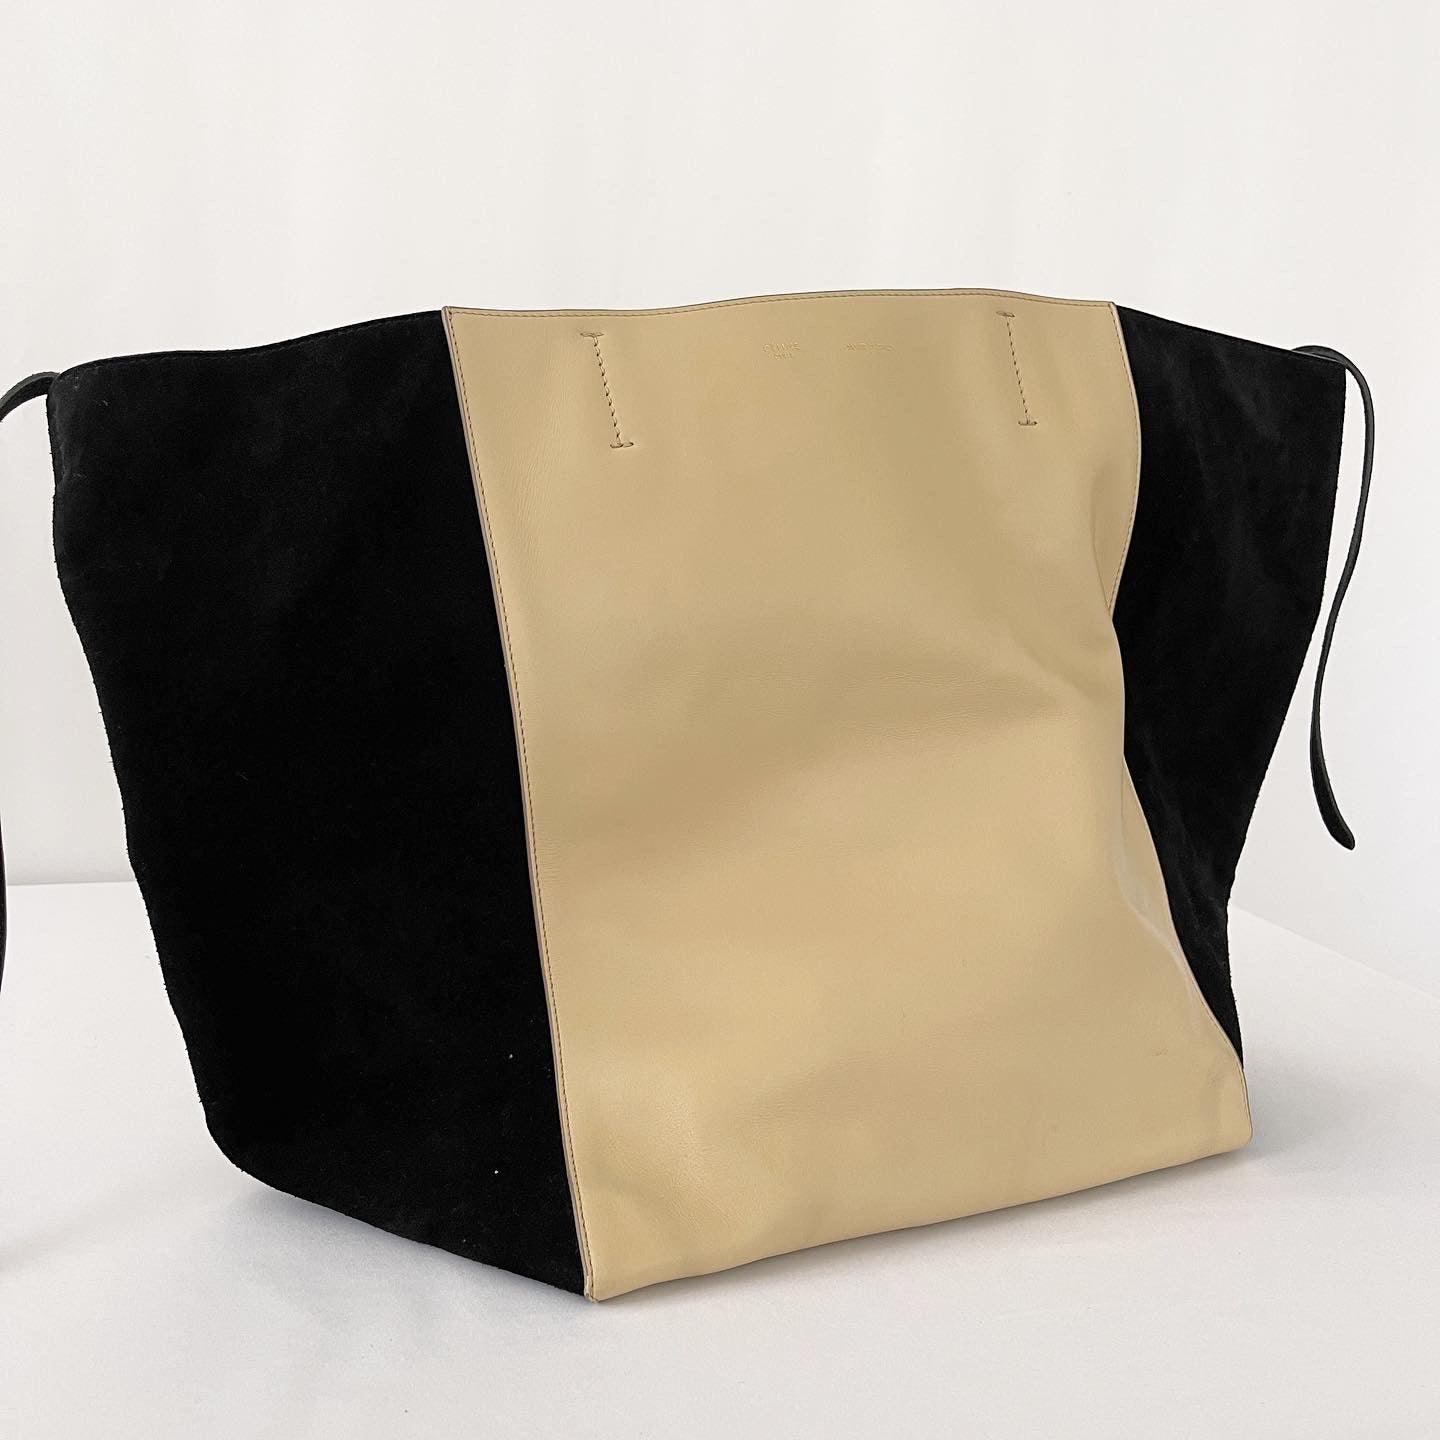 CELINE - CELINE Beige Leather and Black Suede Horizontal Phantom Cabas Tote Bag - AVVIIVVA.COM